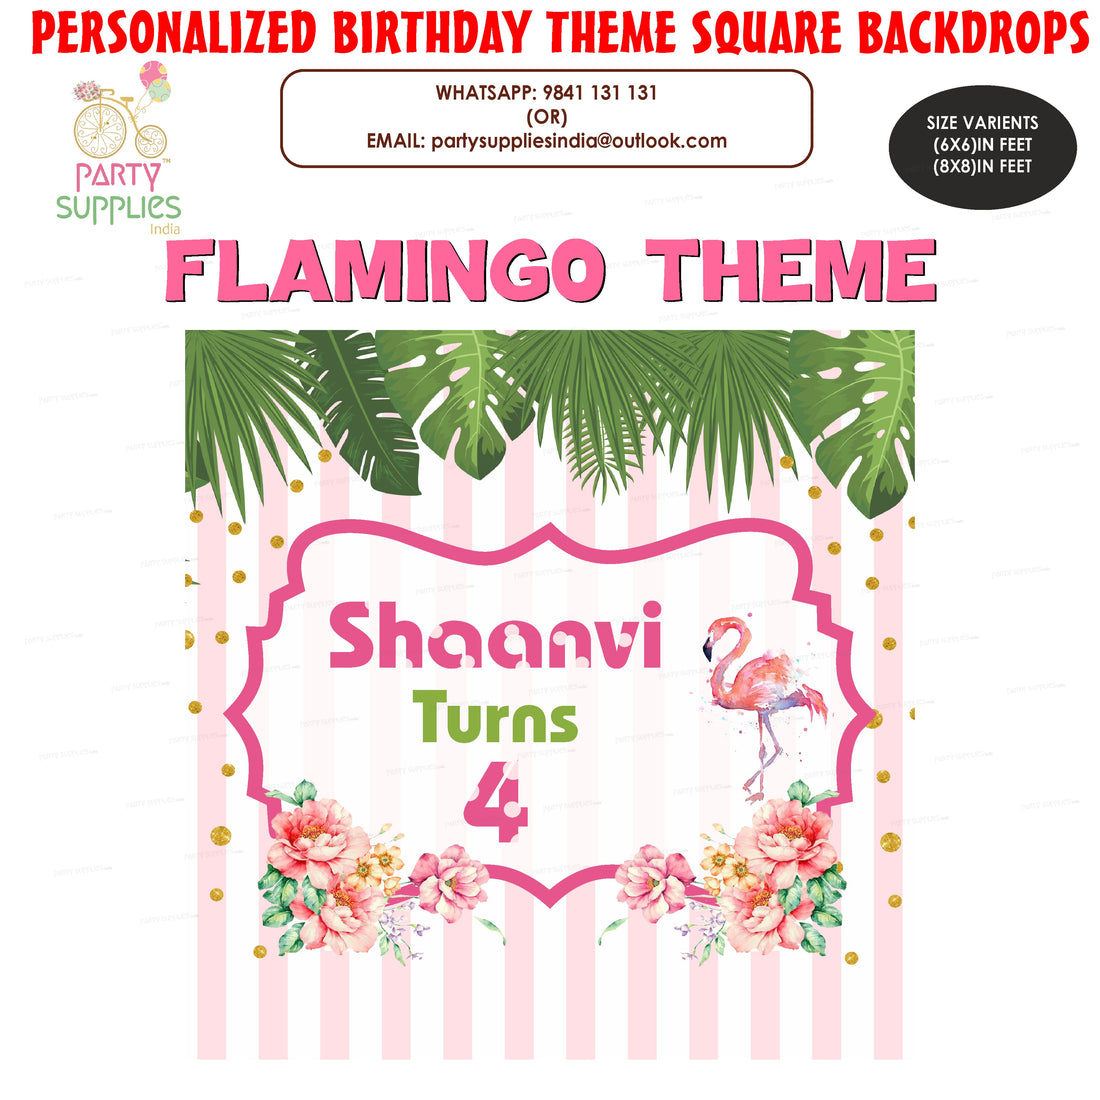 PSI Flamingo Theme Personalized Square Backdrop